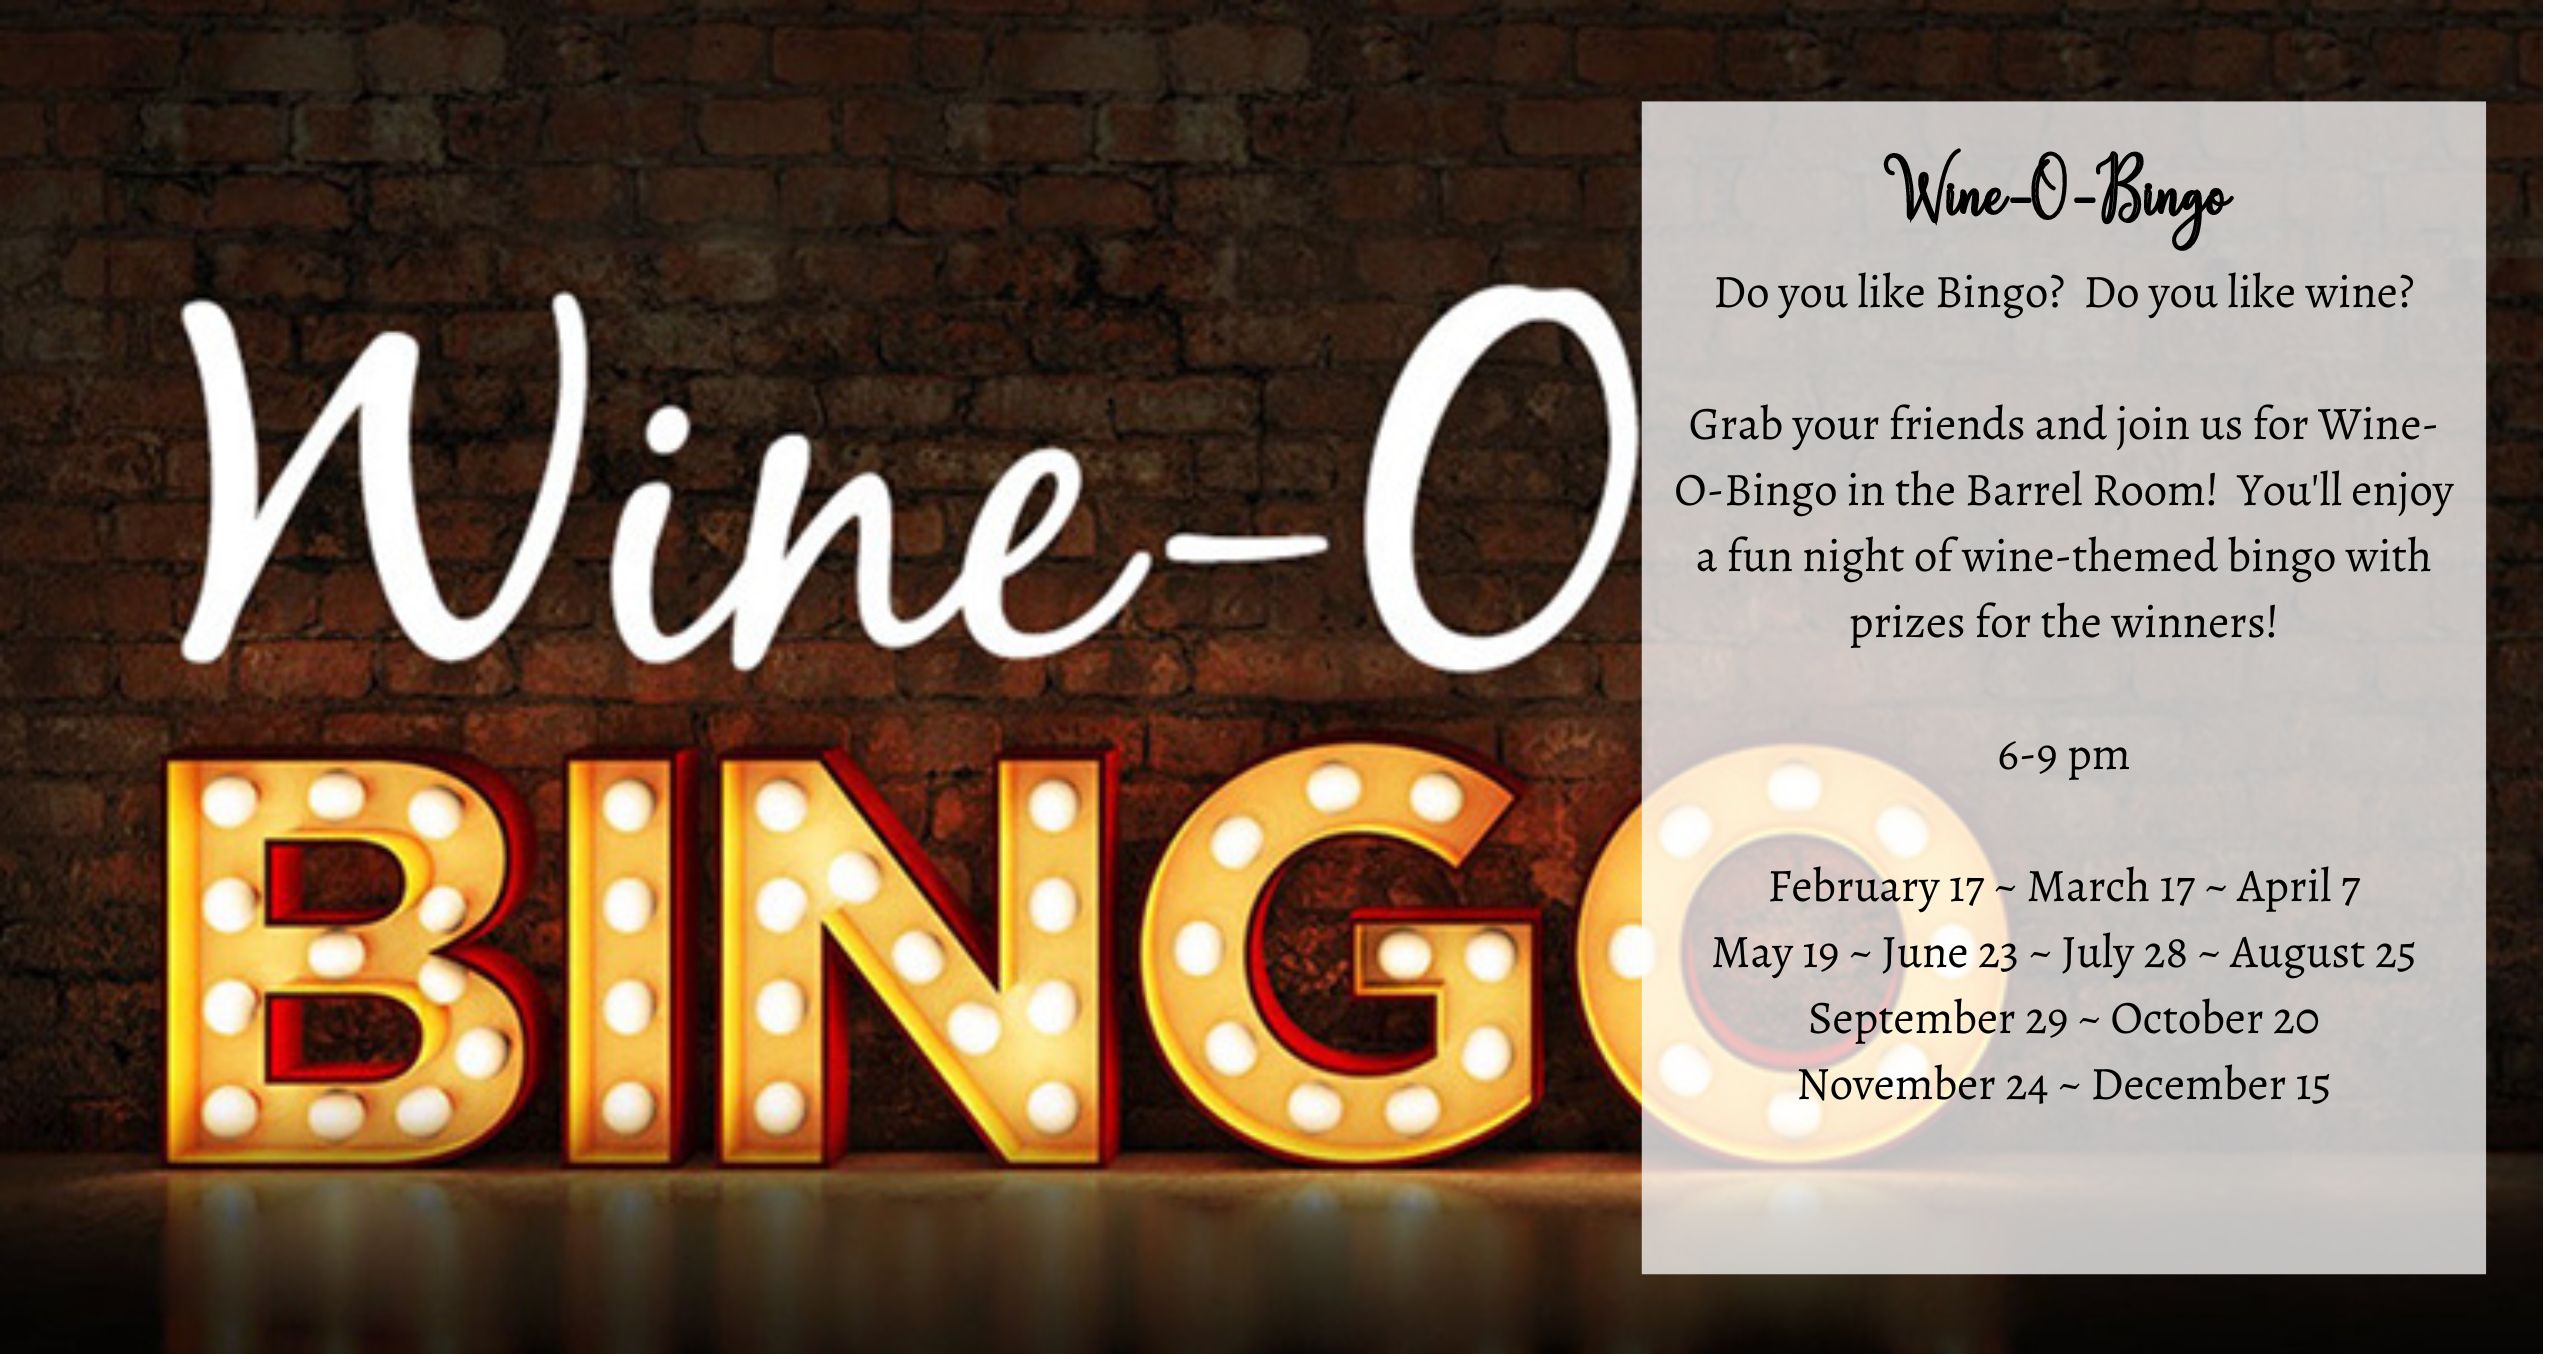 Wine-o-Bingo event information